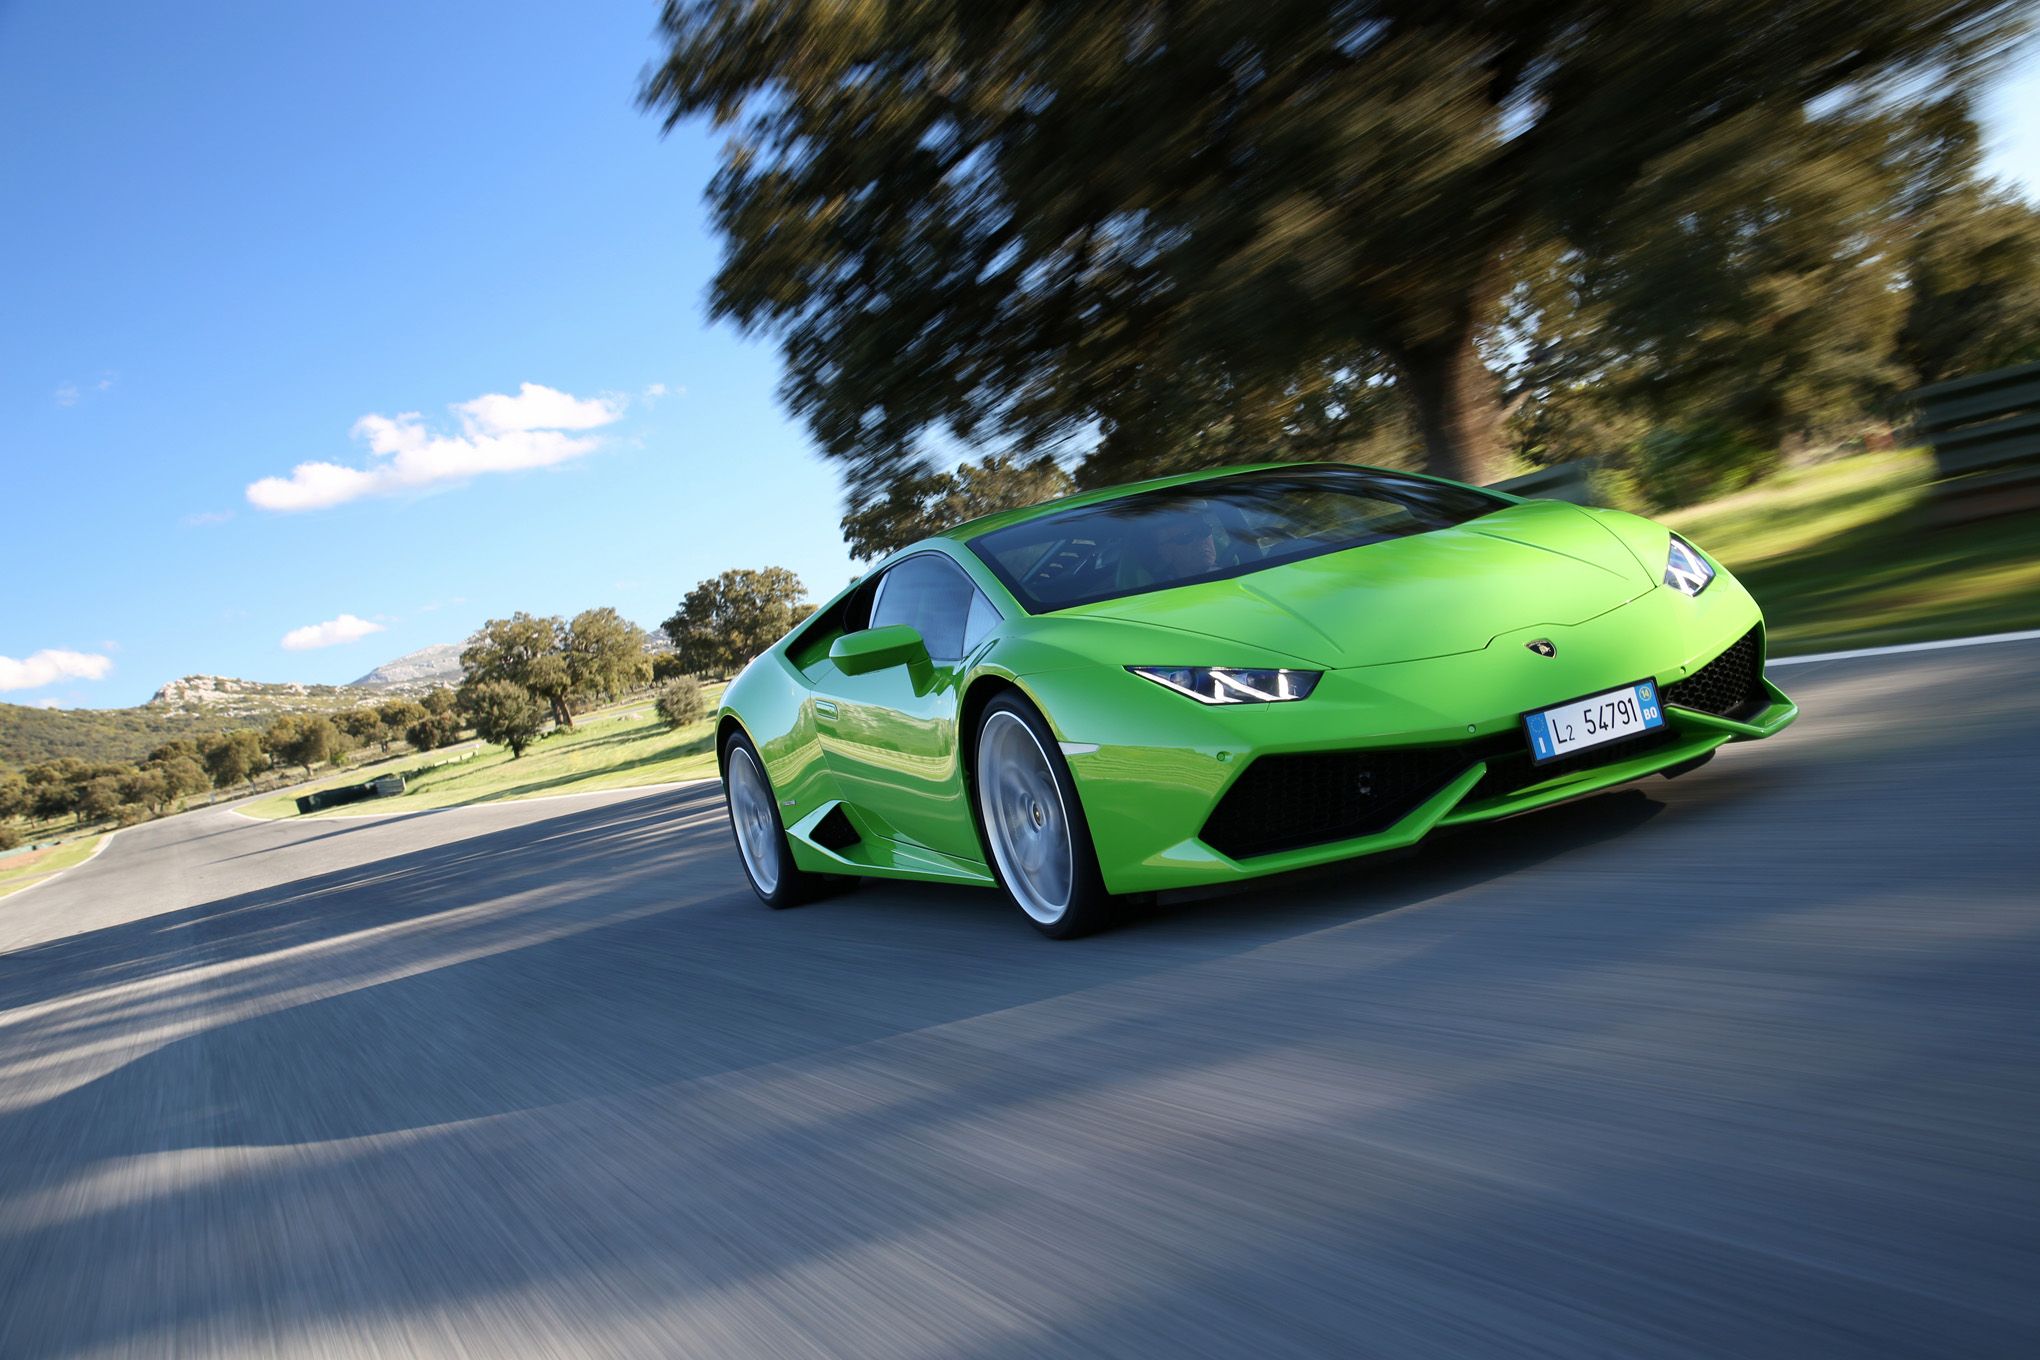 2015 Lamborghini Huracan Green Good Images #8851 New Trend elthing.com